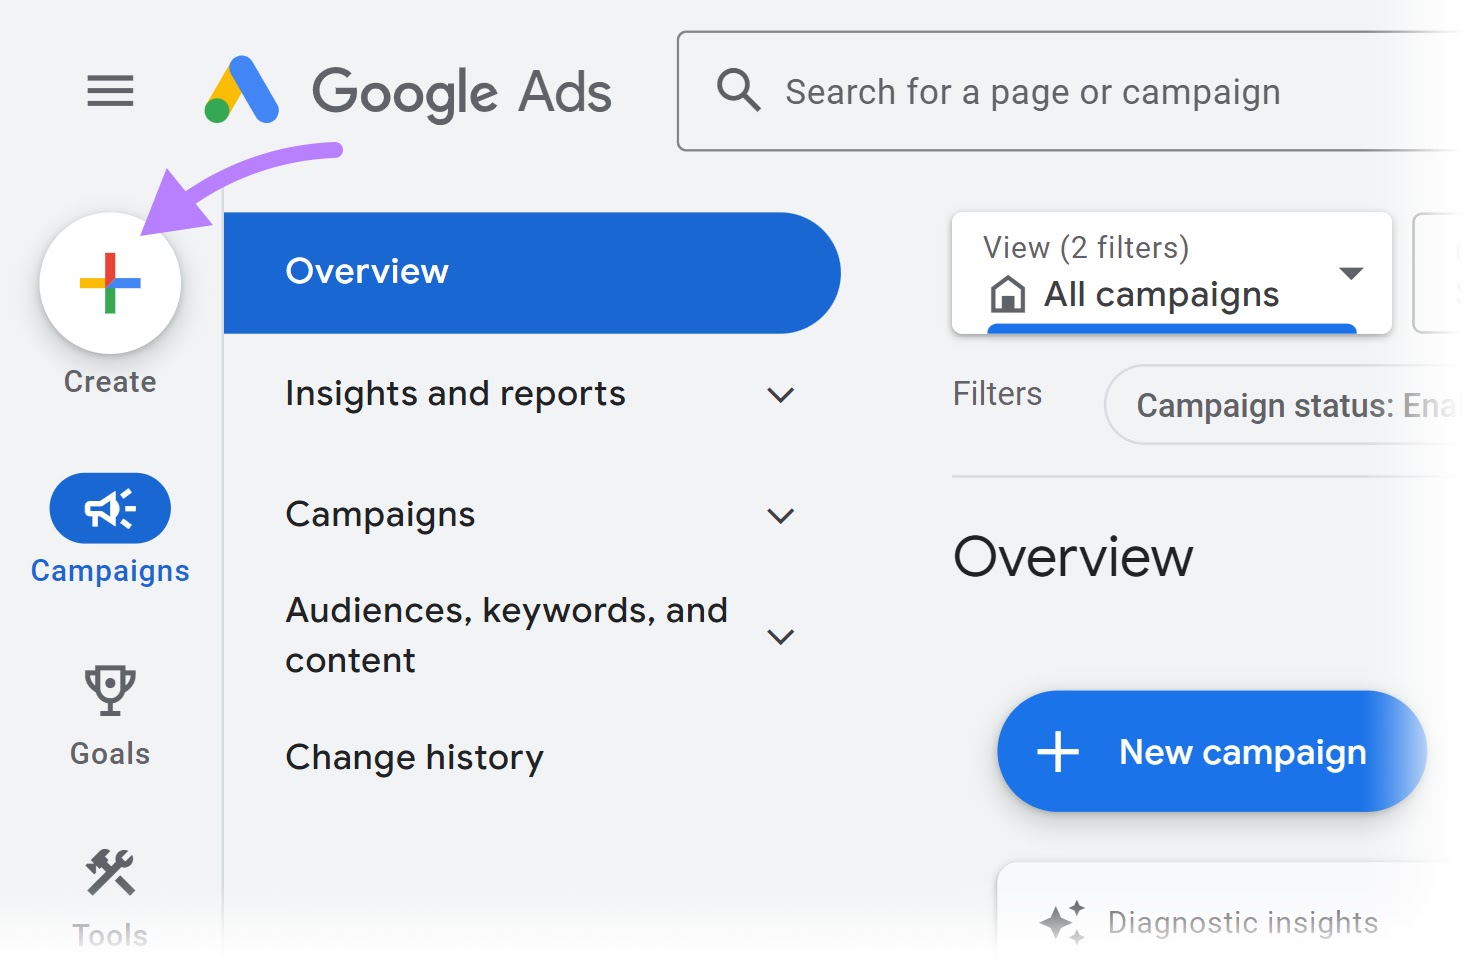 "Create" button in Google Ads account